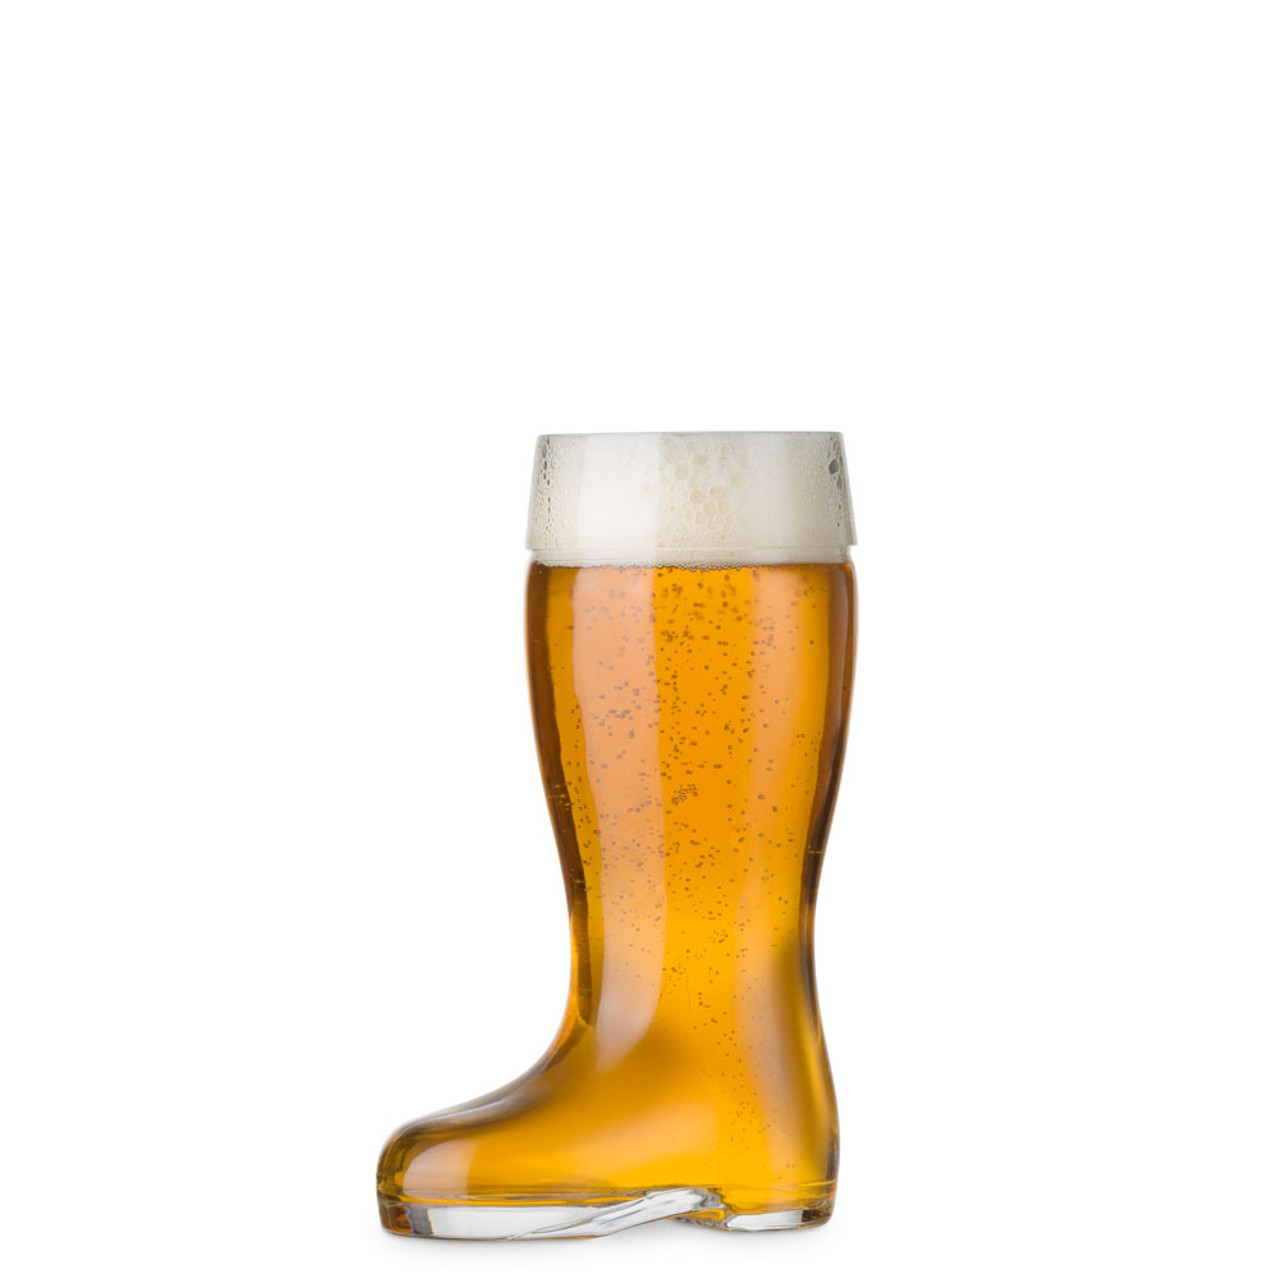 https://cdn11.bigcommerce.com/s-cznxq08r7/images/stencil/1280x1280/products/5011/13903/09735-458047-Stolzle-Biersiefel-Oktoberfest-Glass-Beer-Boot-9-oz-1__90288.1627677695.jpg?c=1